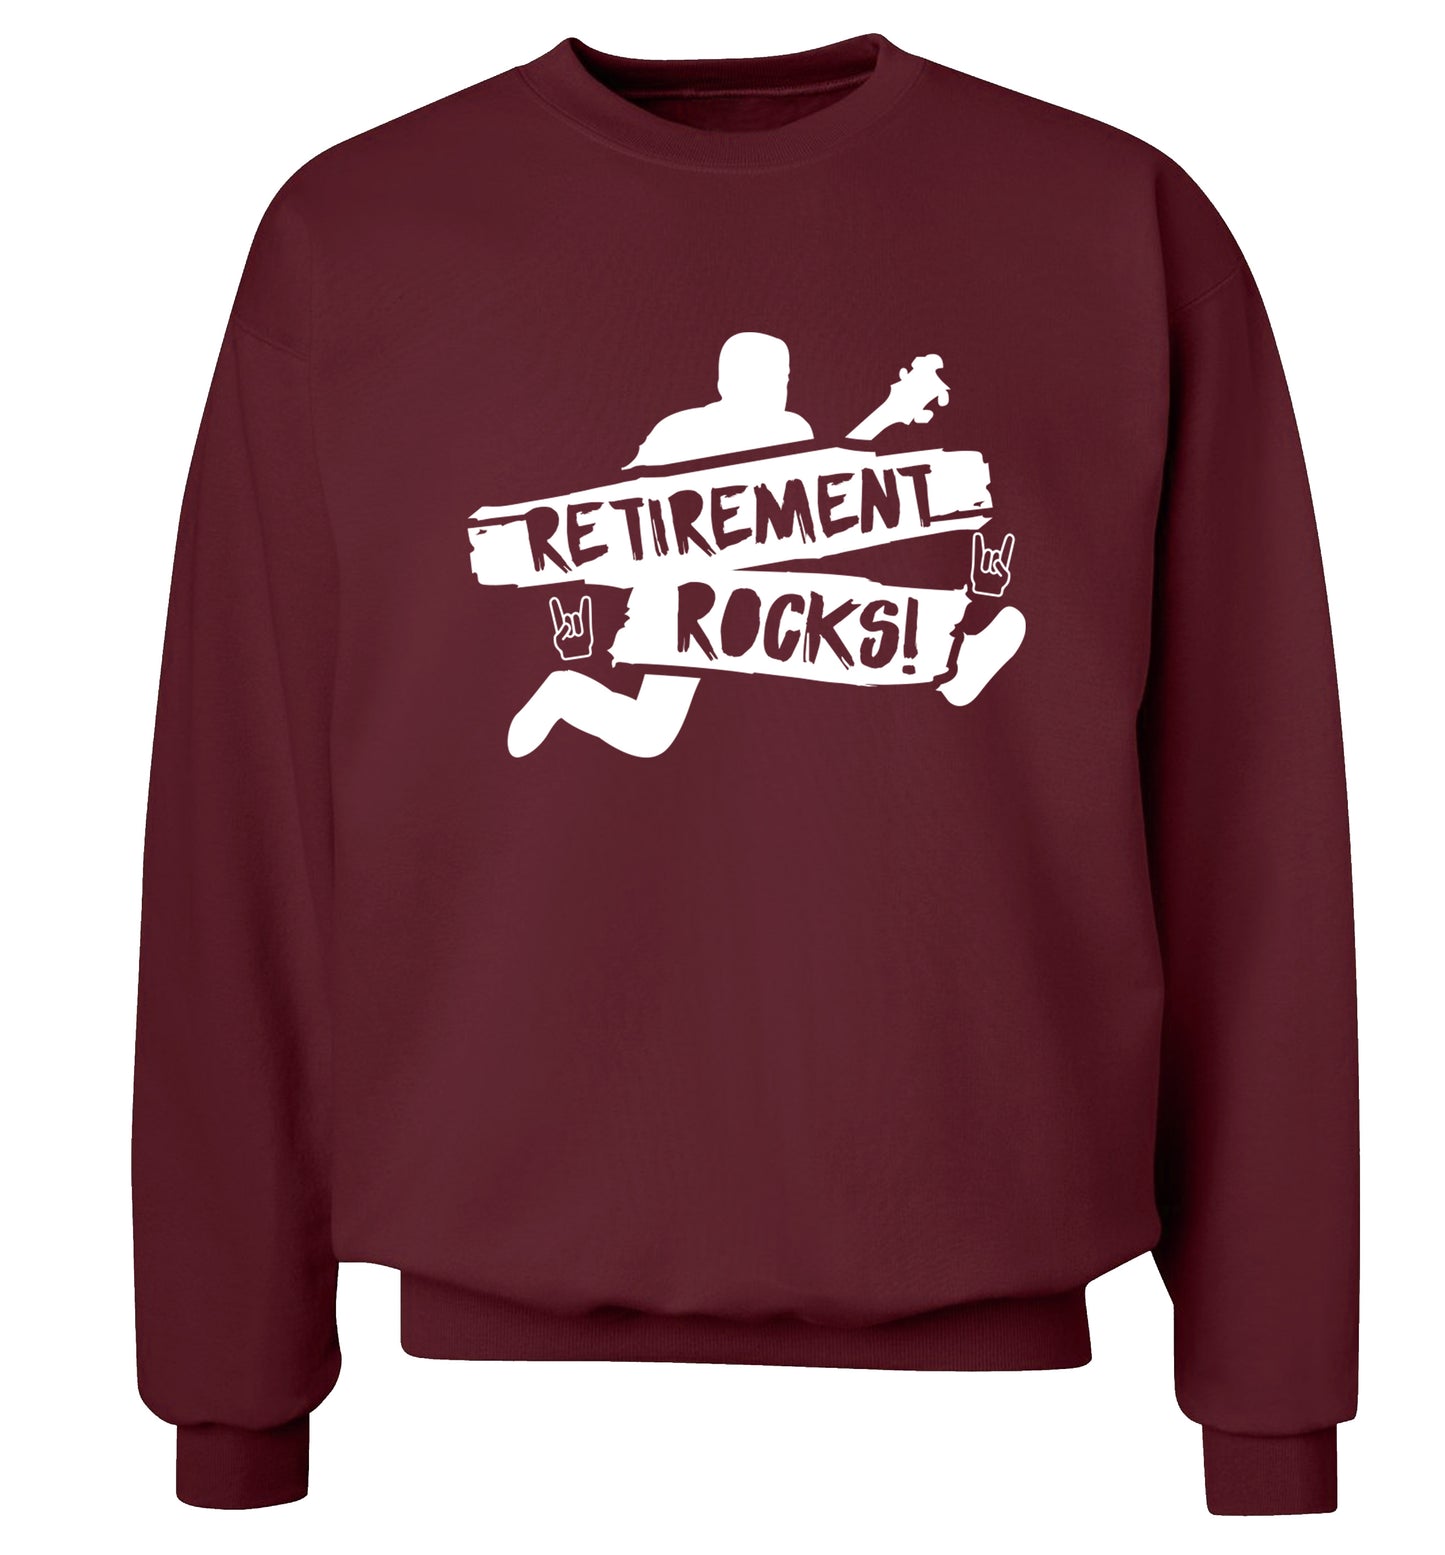 Retirement Rocks Adult's unisex maroon Sweater 2XL